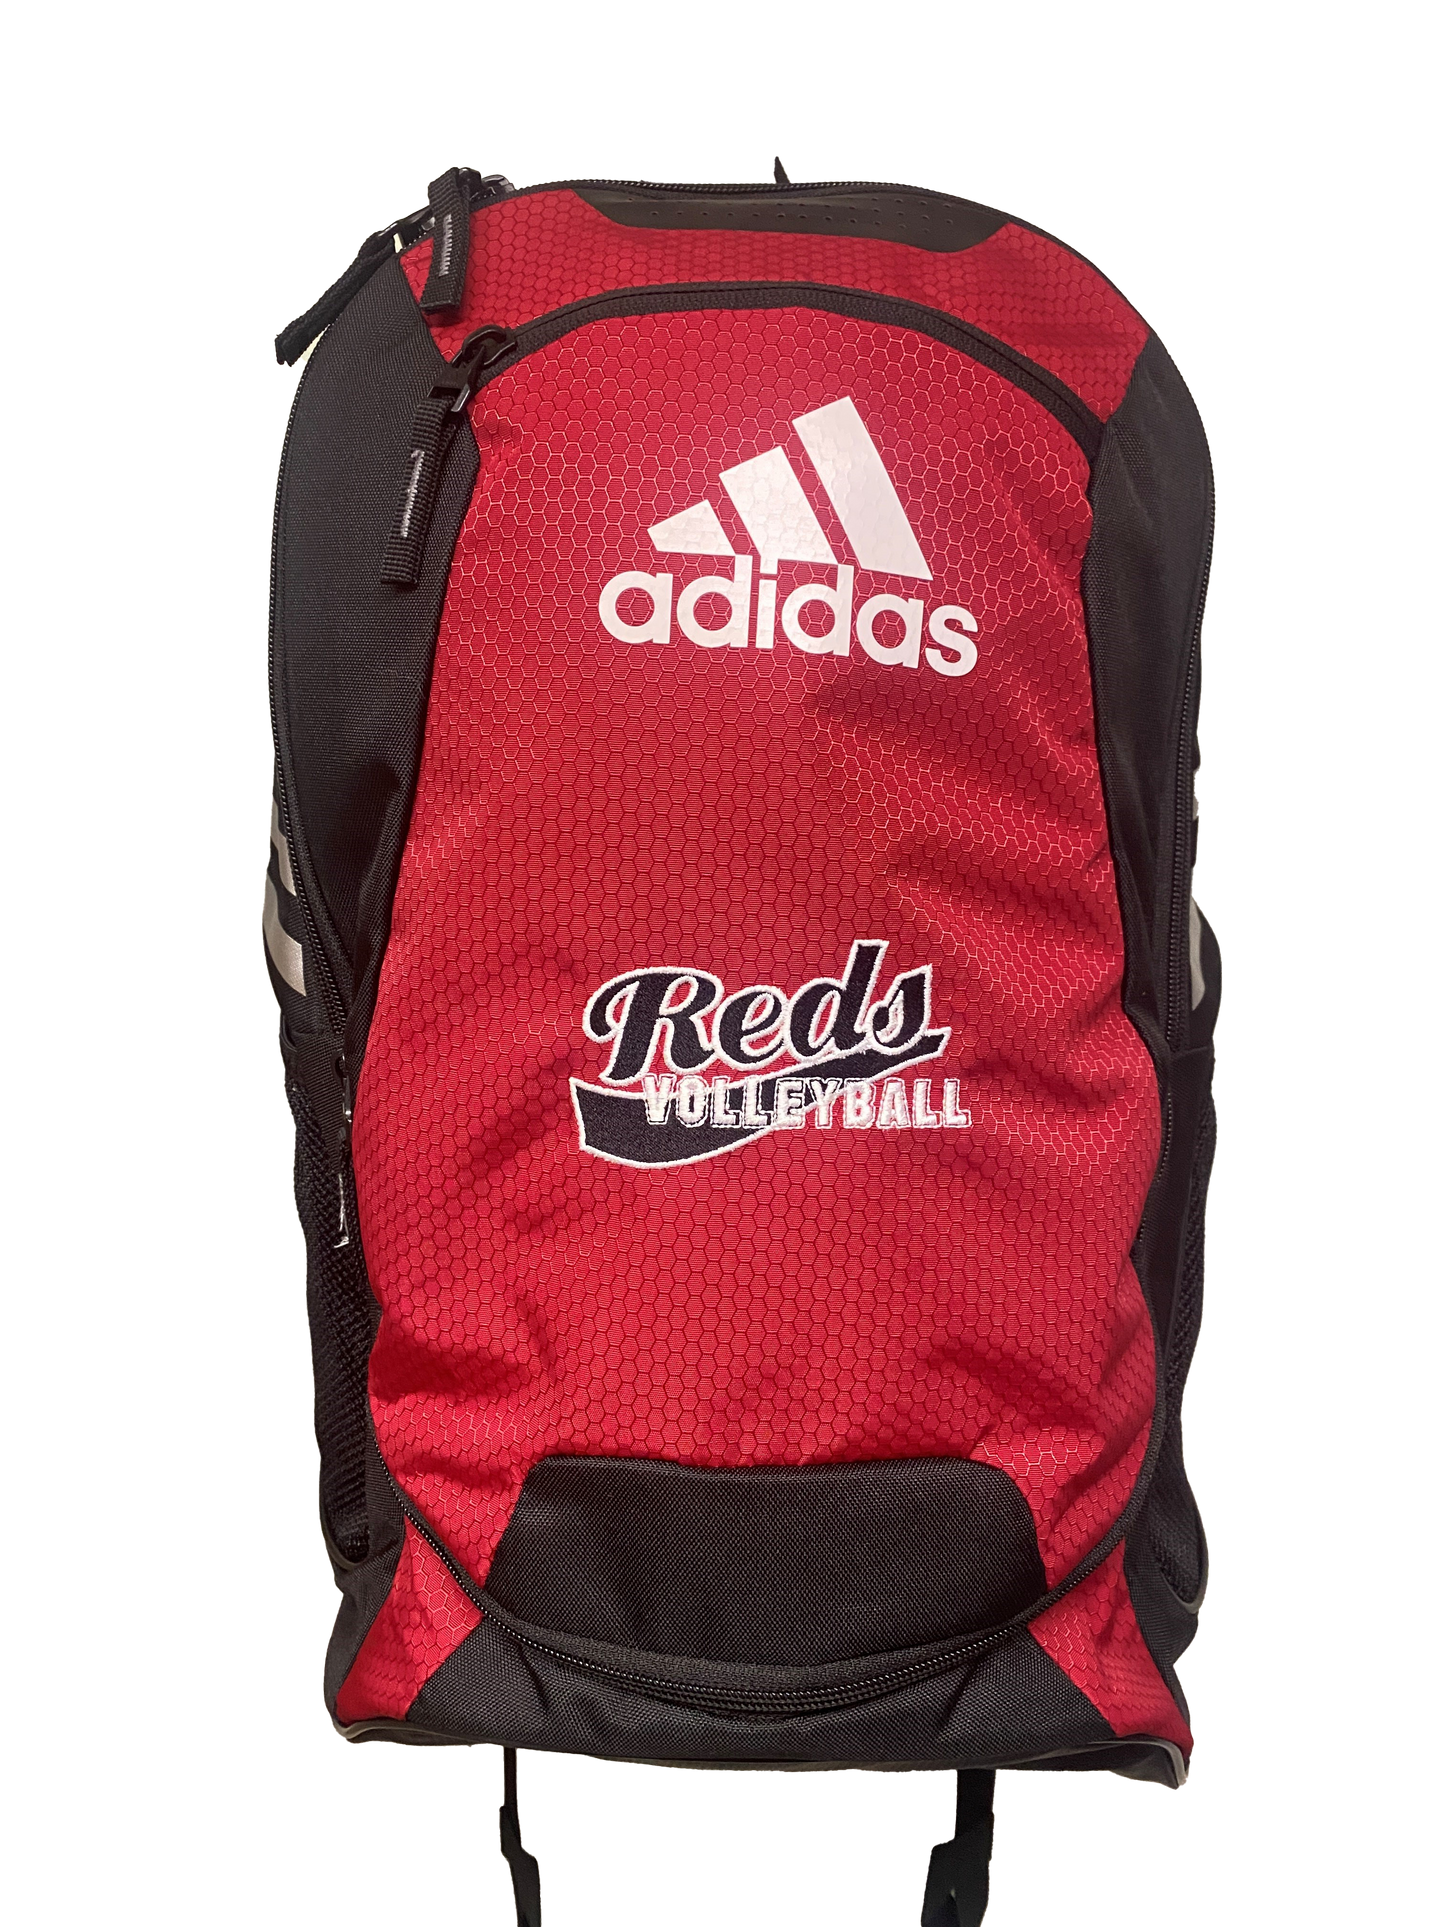 Reds - Adidas Stadium 3 Backpack